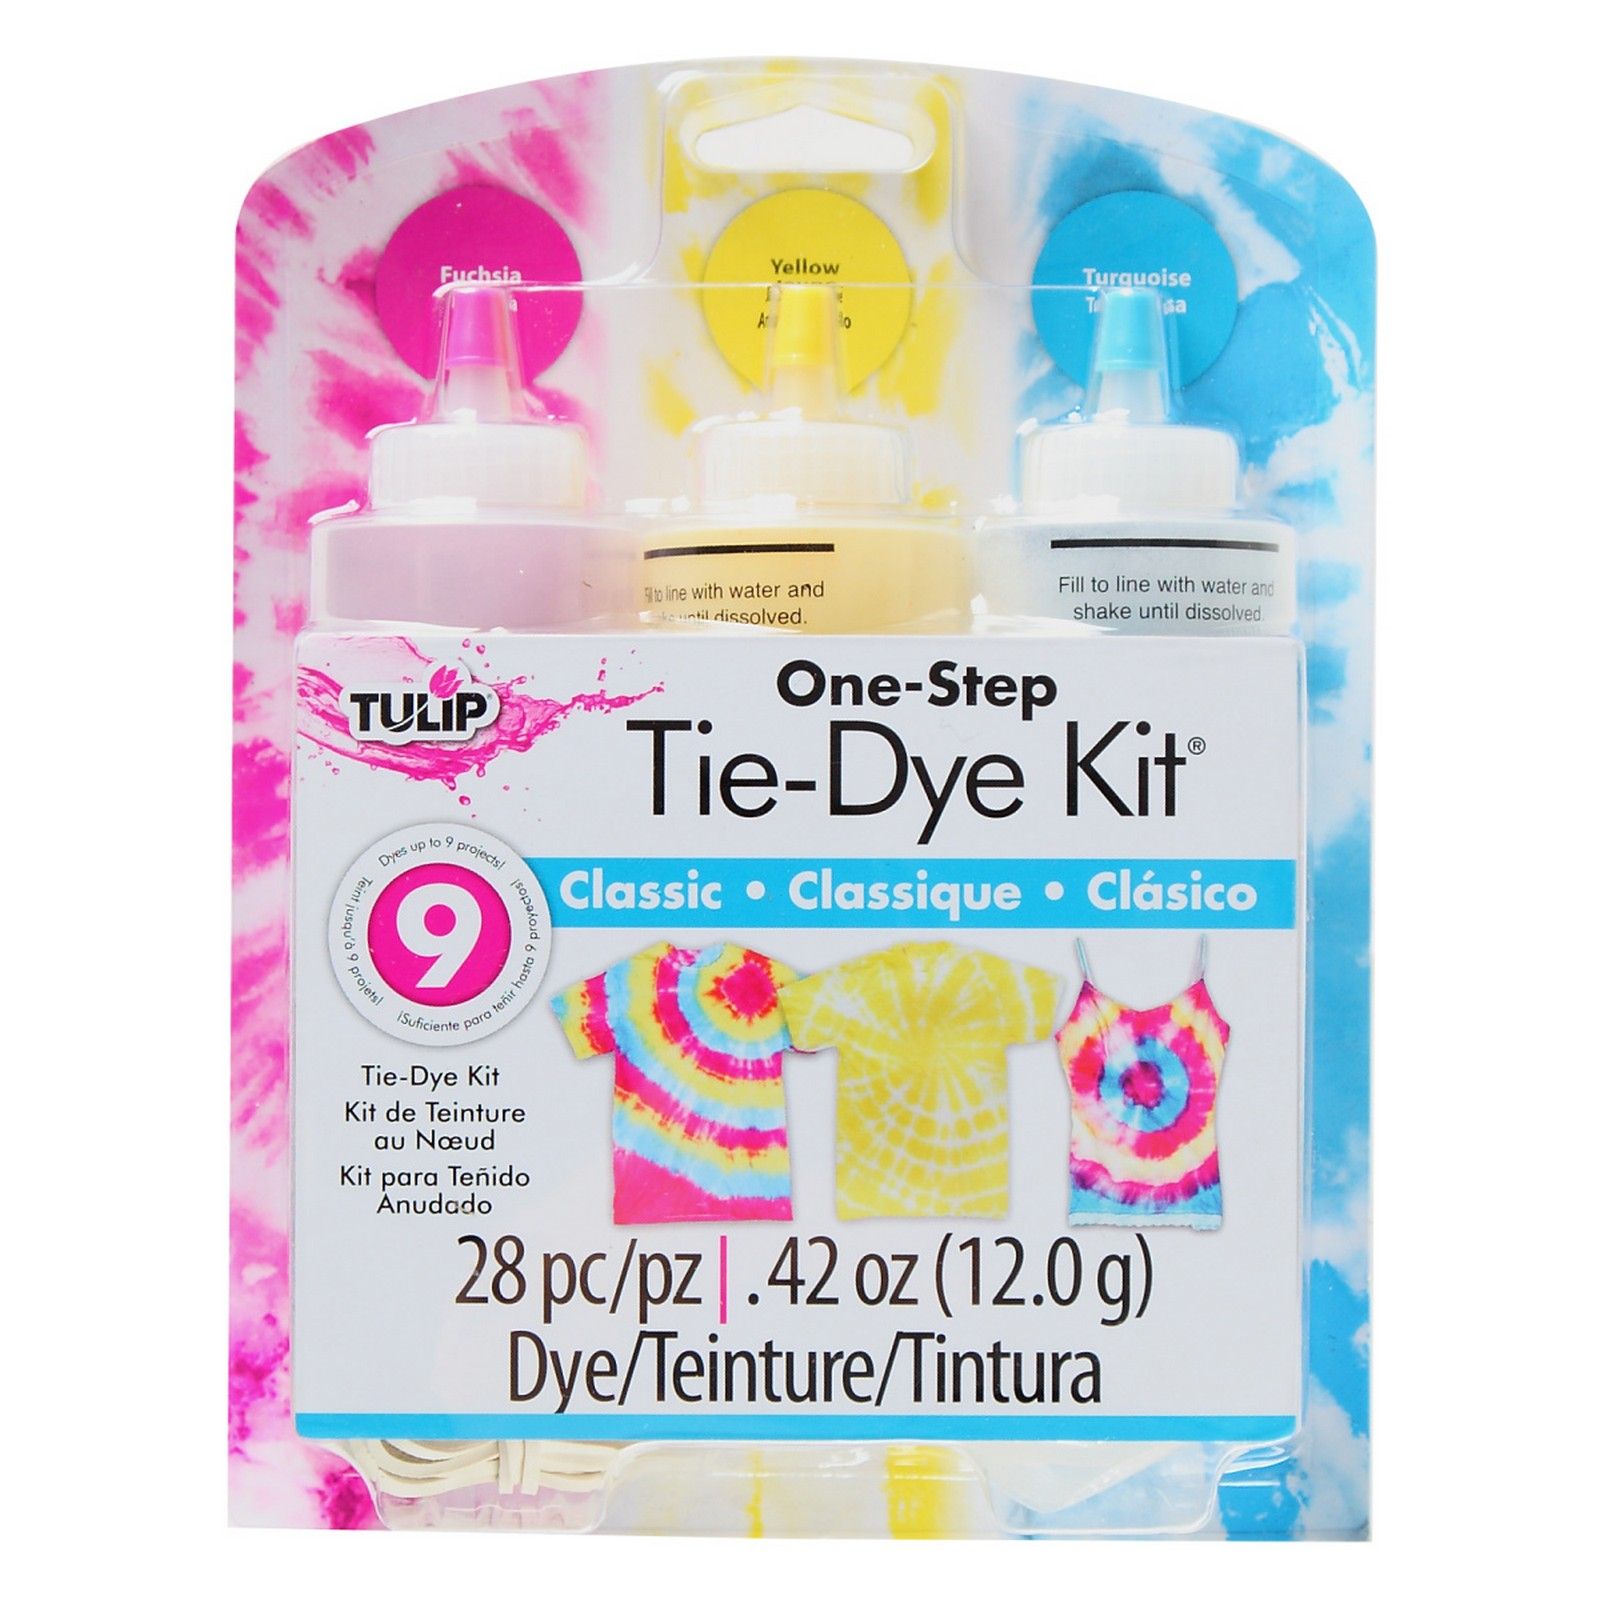 Tulip one-step tie dye • Tie dye kit 3 colors Classic